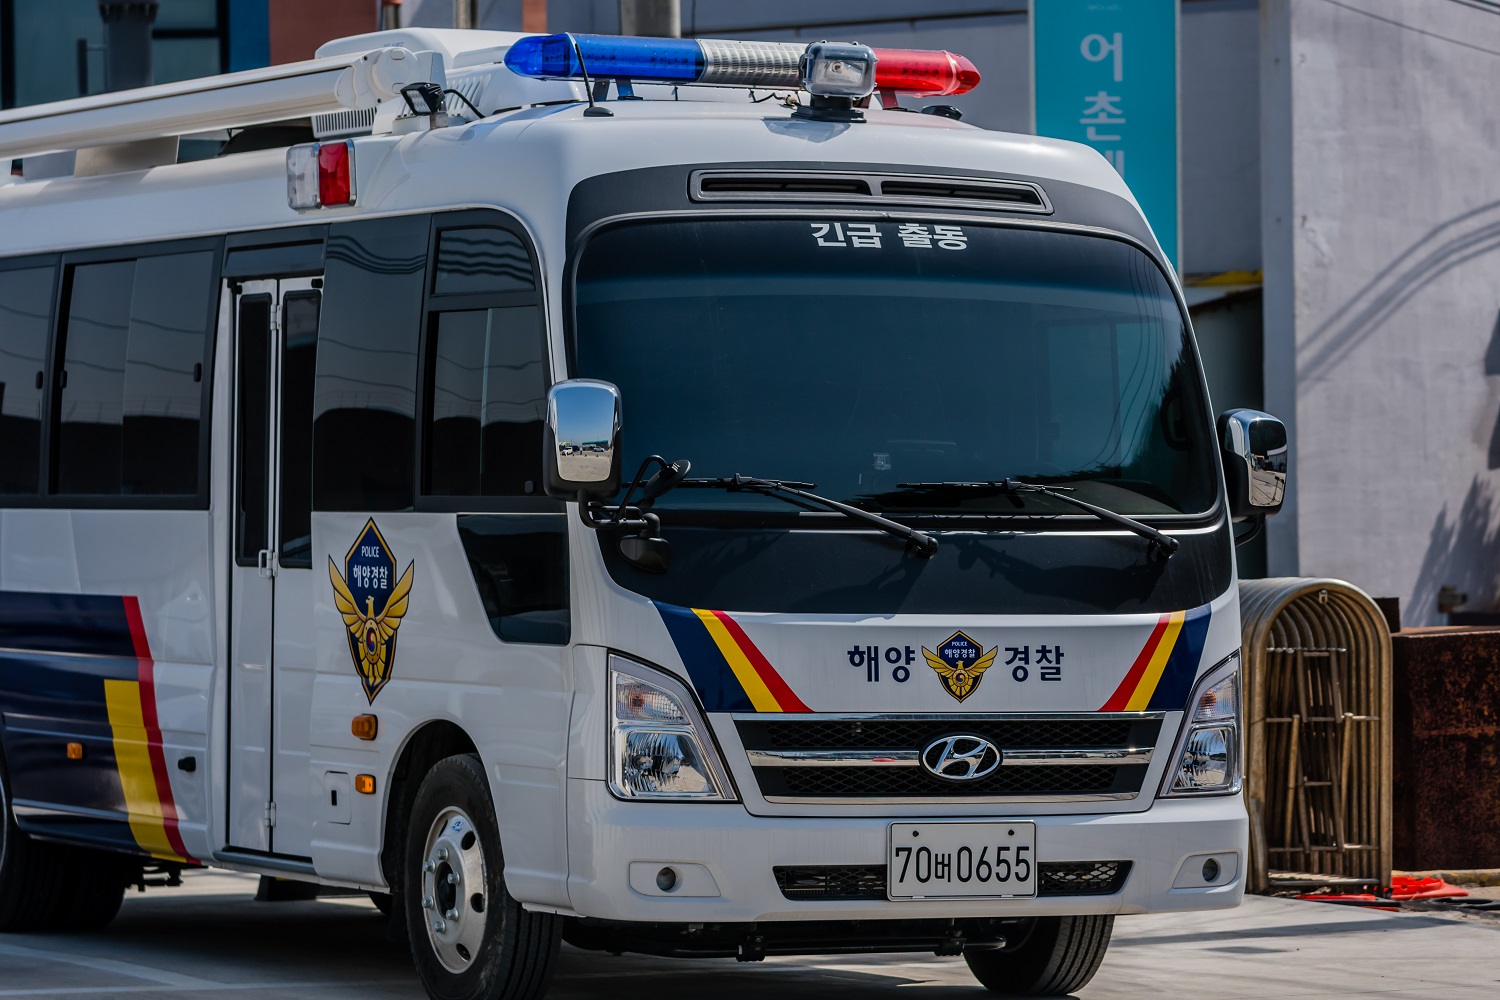 A South Korean police bus on an urban street.